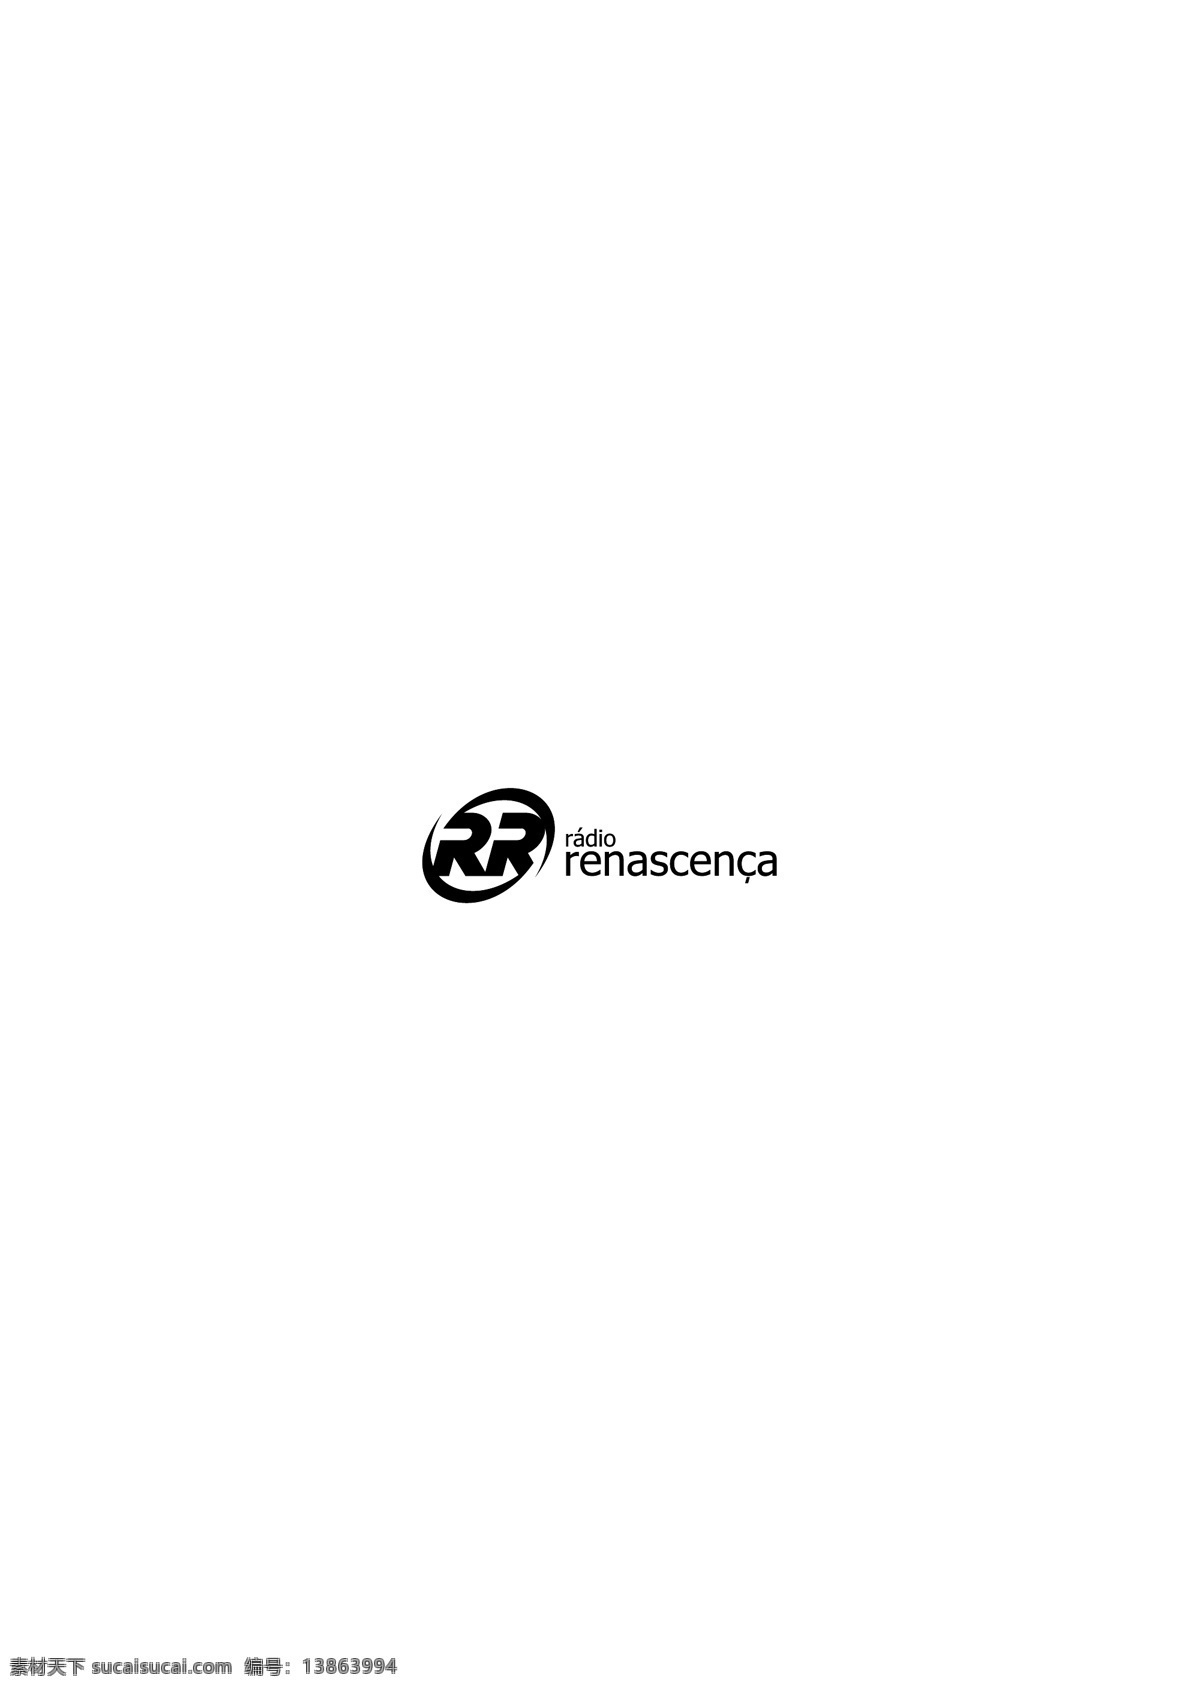 logo大全 logo 设计欣赏 商业矢量 矢量下载 radio nenascenca5 标志设计 欣赏 网页矢量 矢量图 其他矢量图